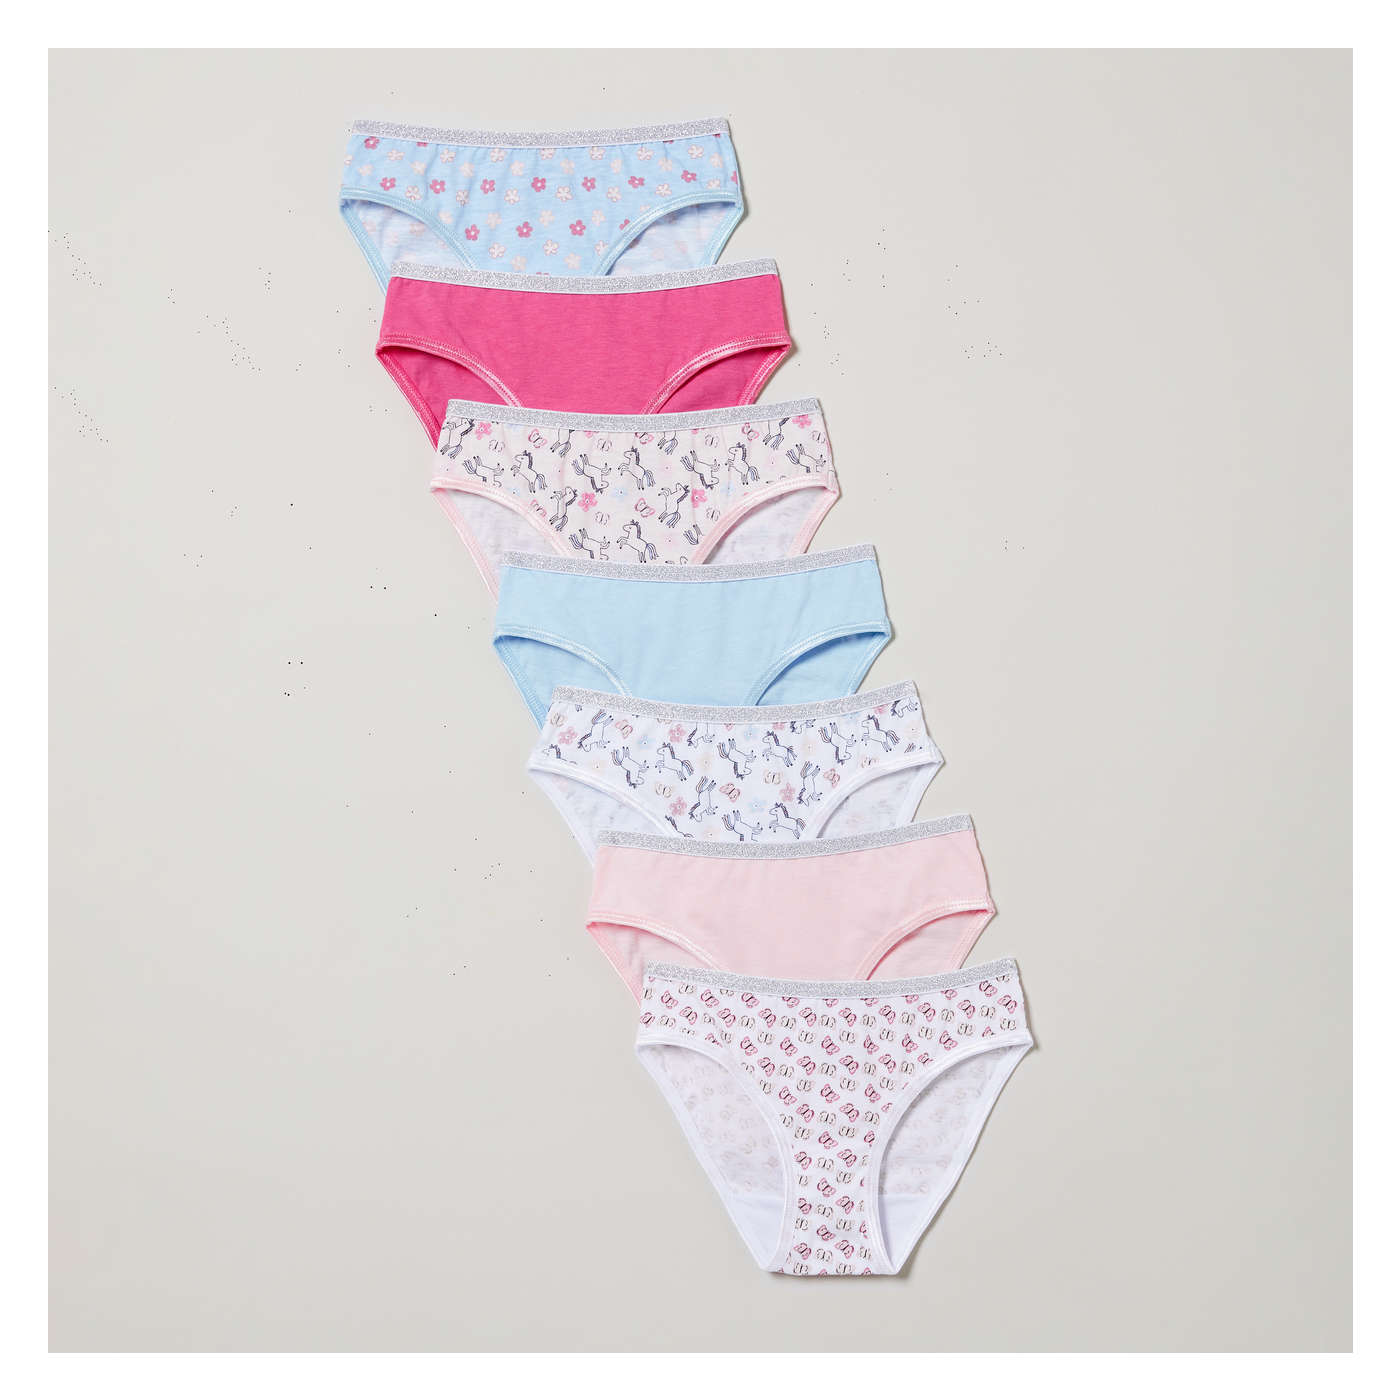 Day-Of-The-Week Bikini-Underwear 7-Pack For Toddler Girls